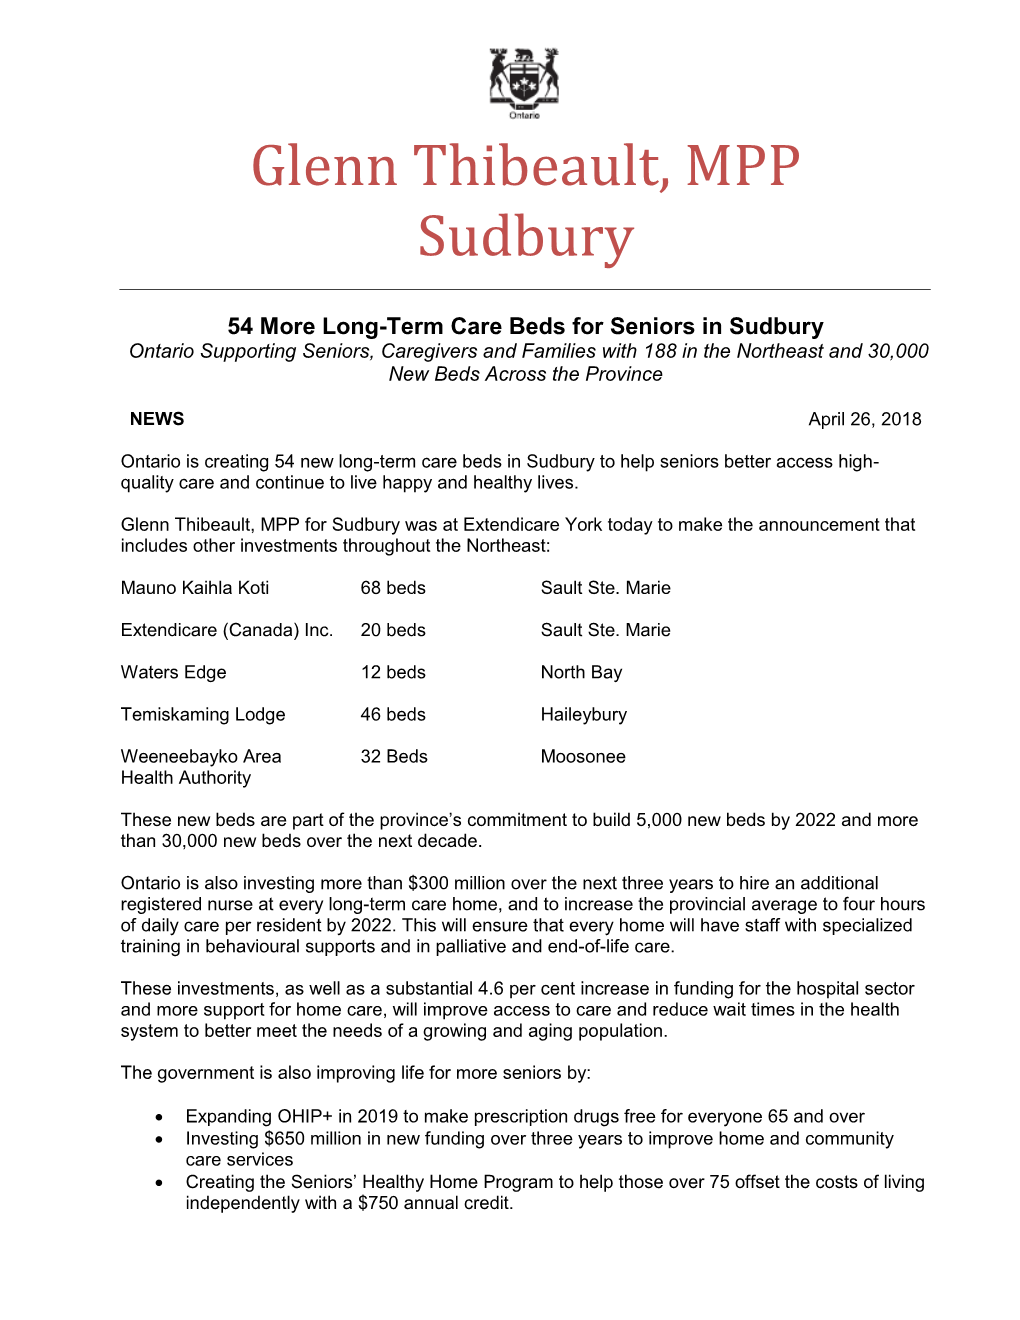 Glenn Thibeault, MPP Sudbury